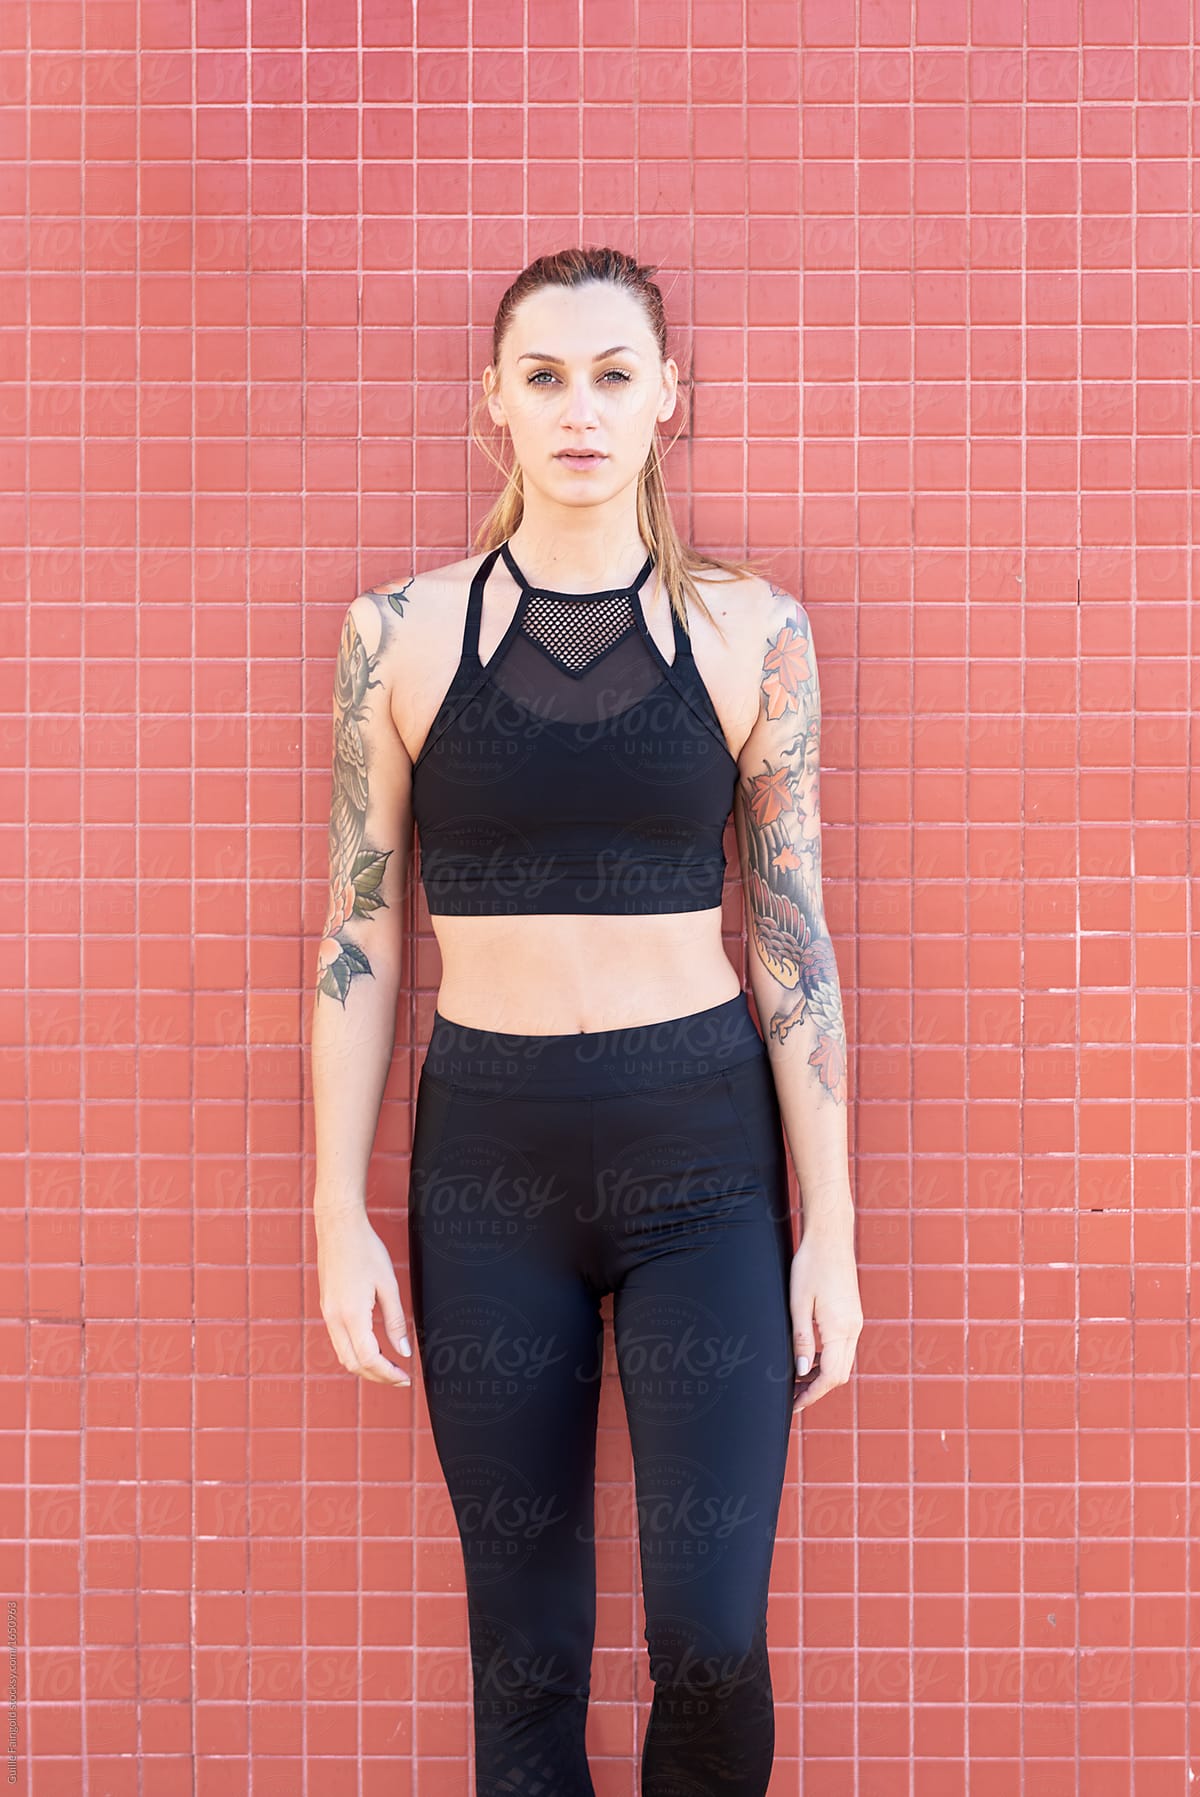 Woman in black sportswear with tattooed arms